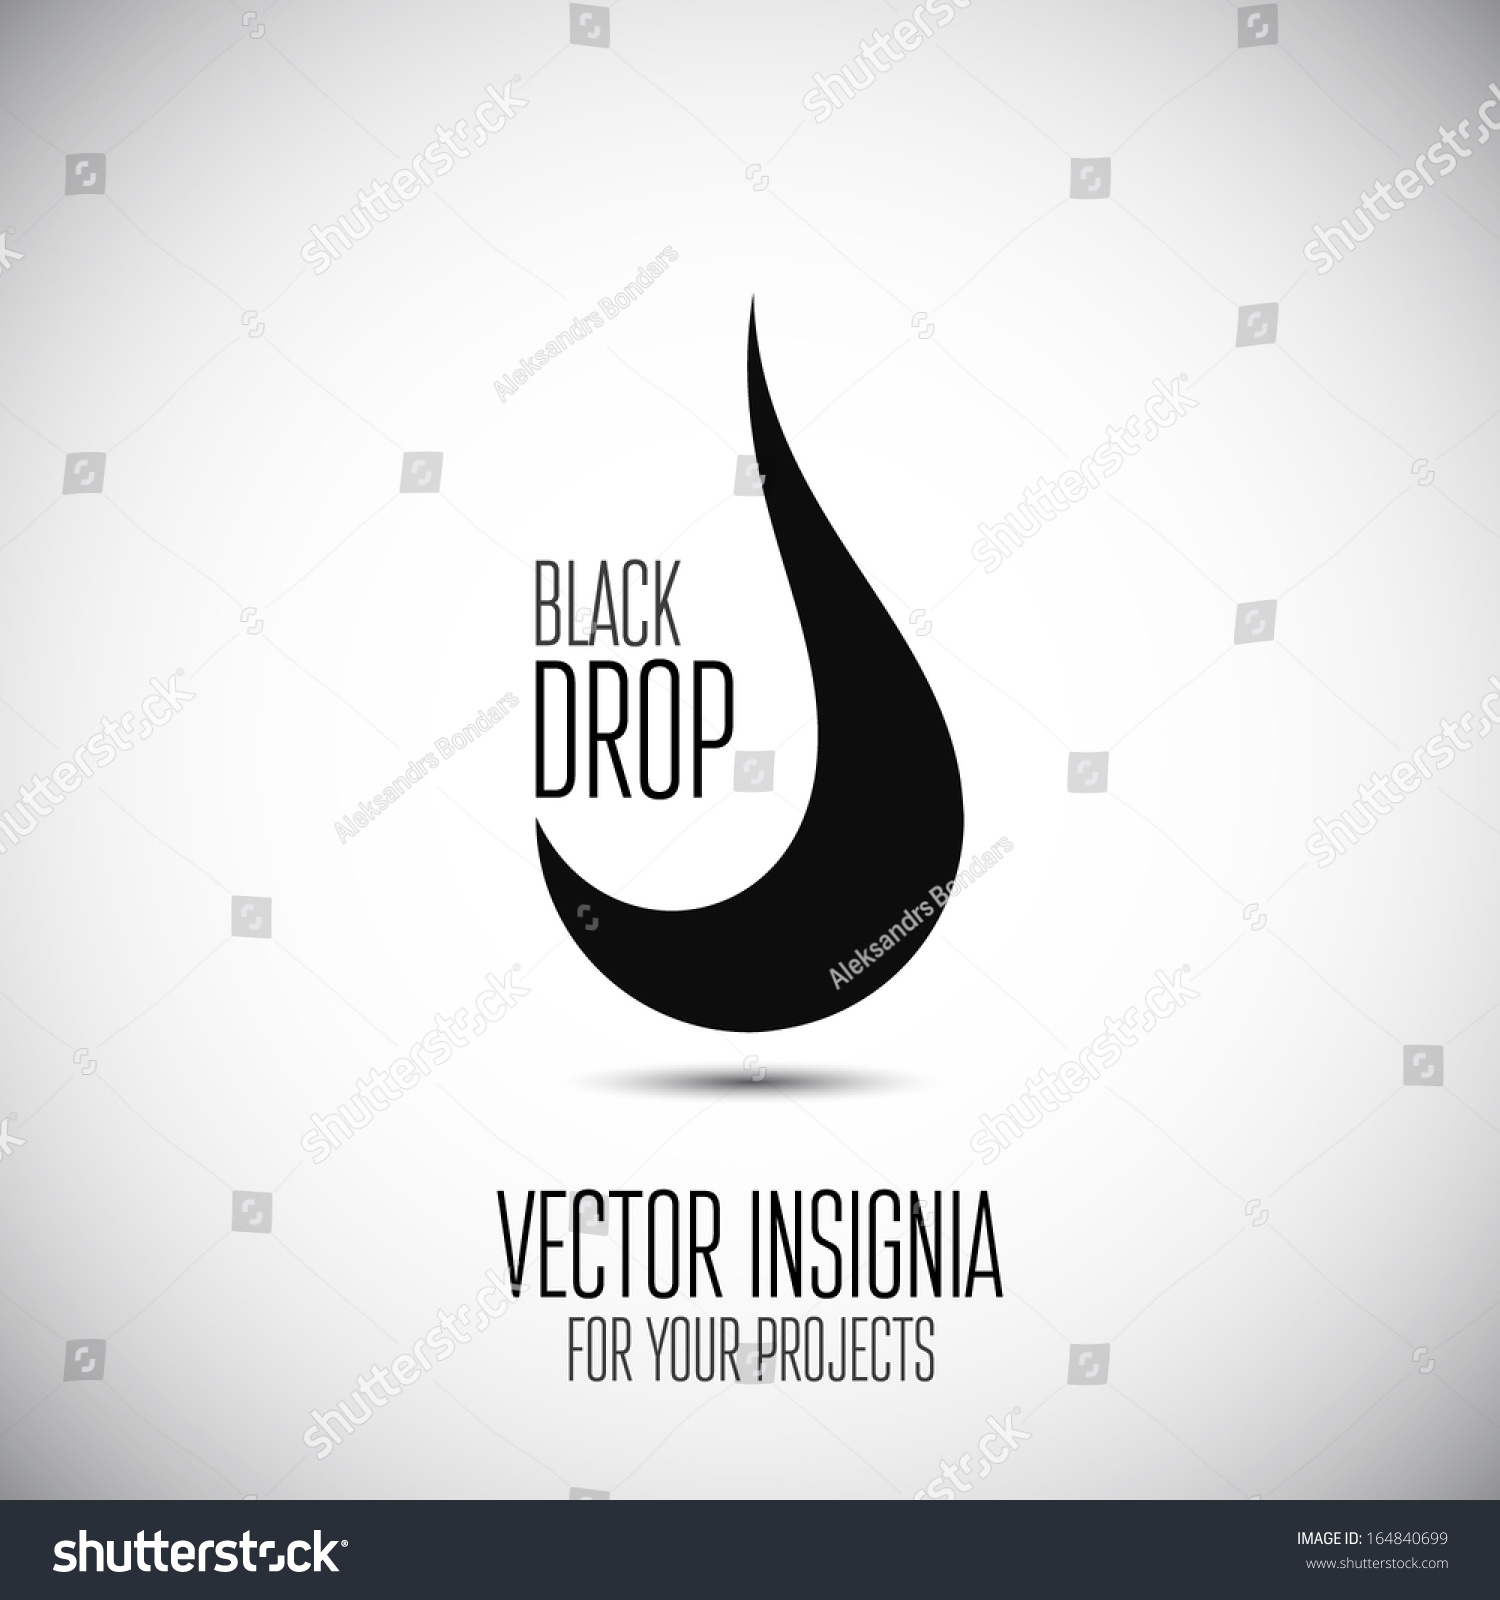 Abstract Black Drop Icon. Vector Illustration - 164840699 : Shutterstock